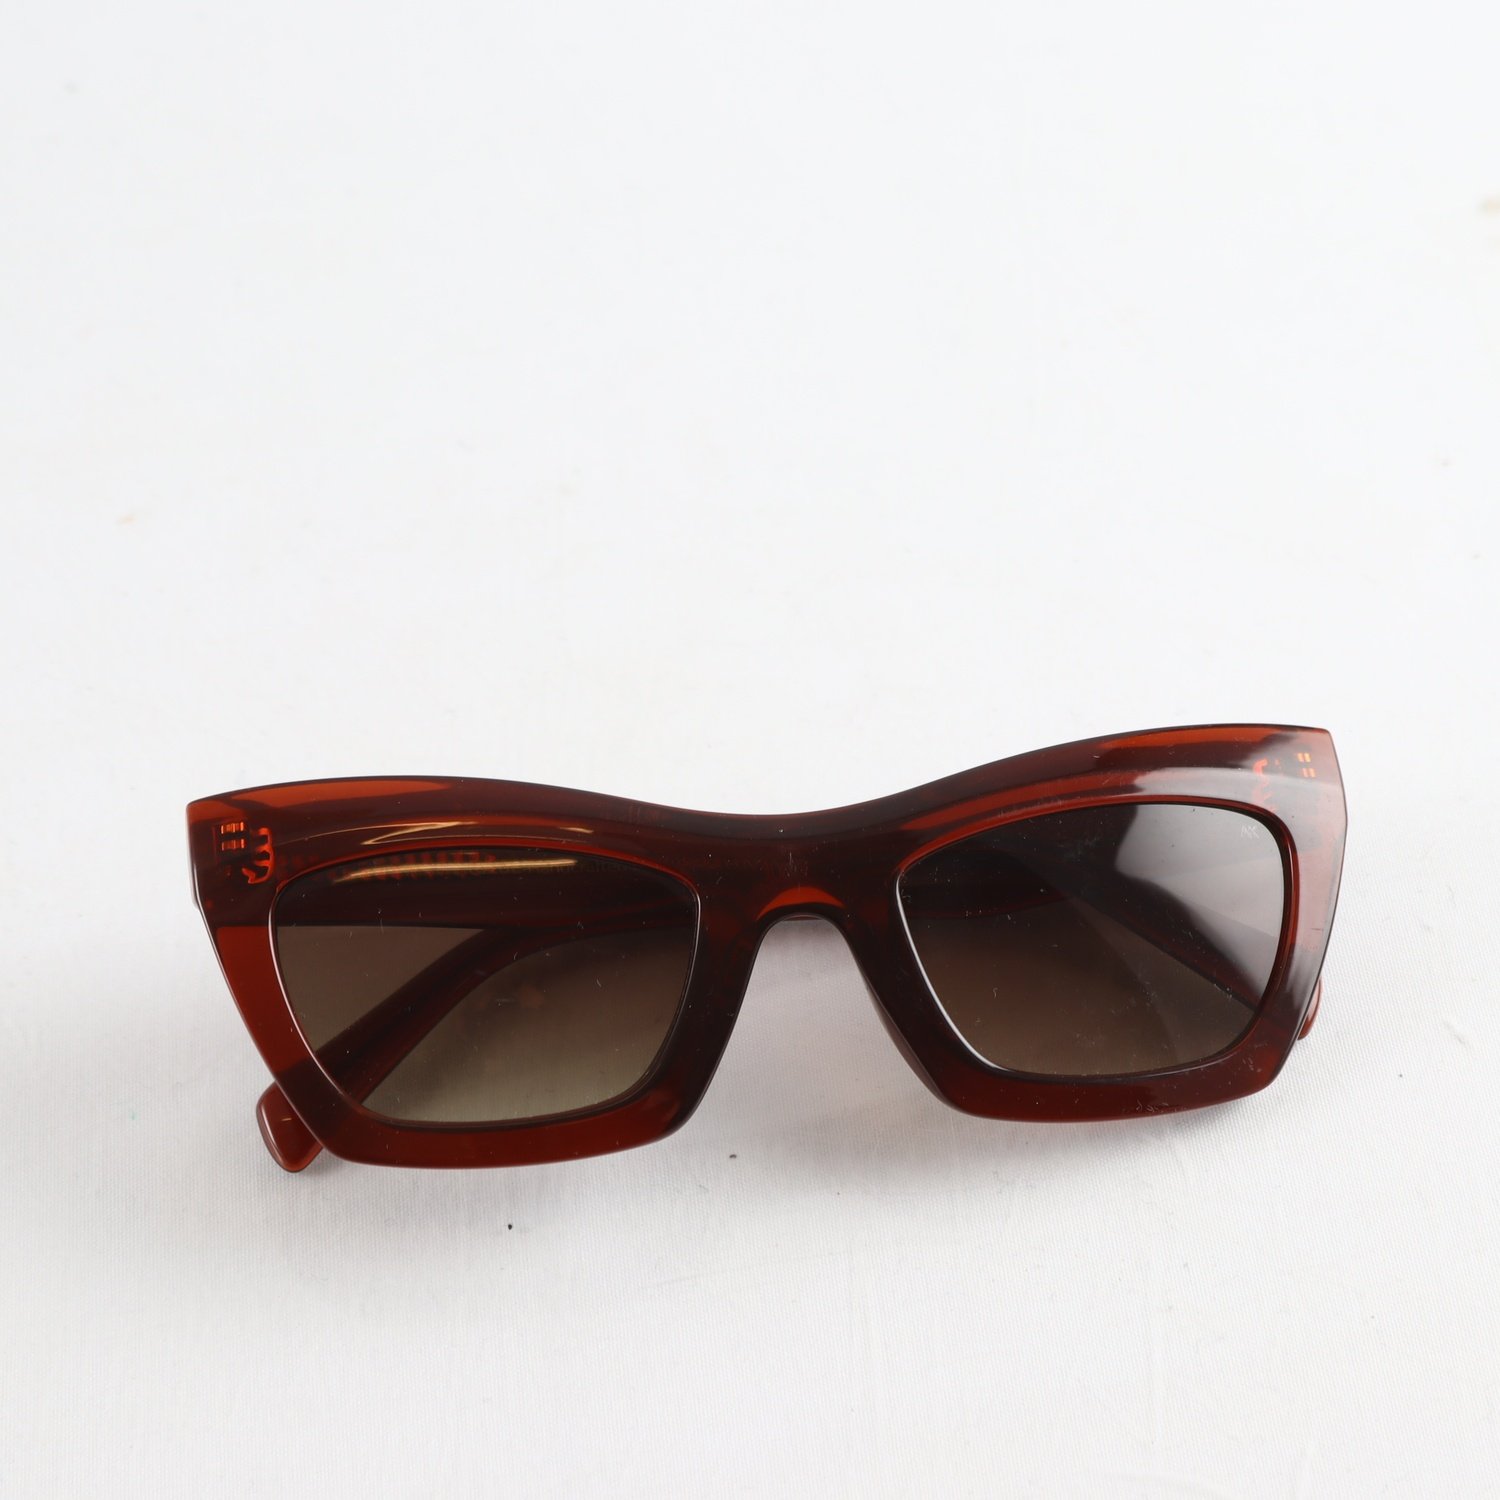 Solglasögon, A. Kjarbede, ”Lux”